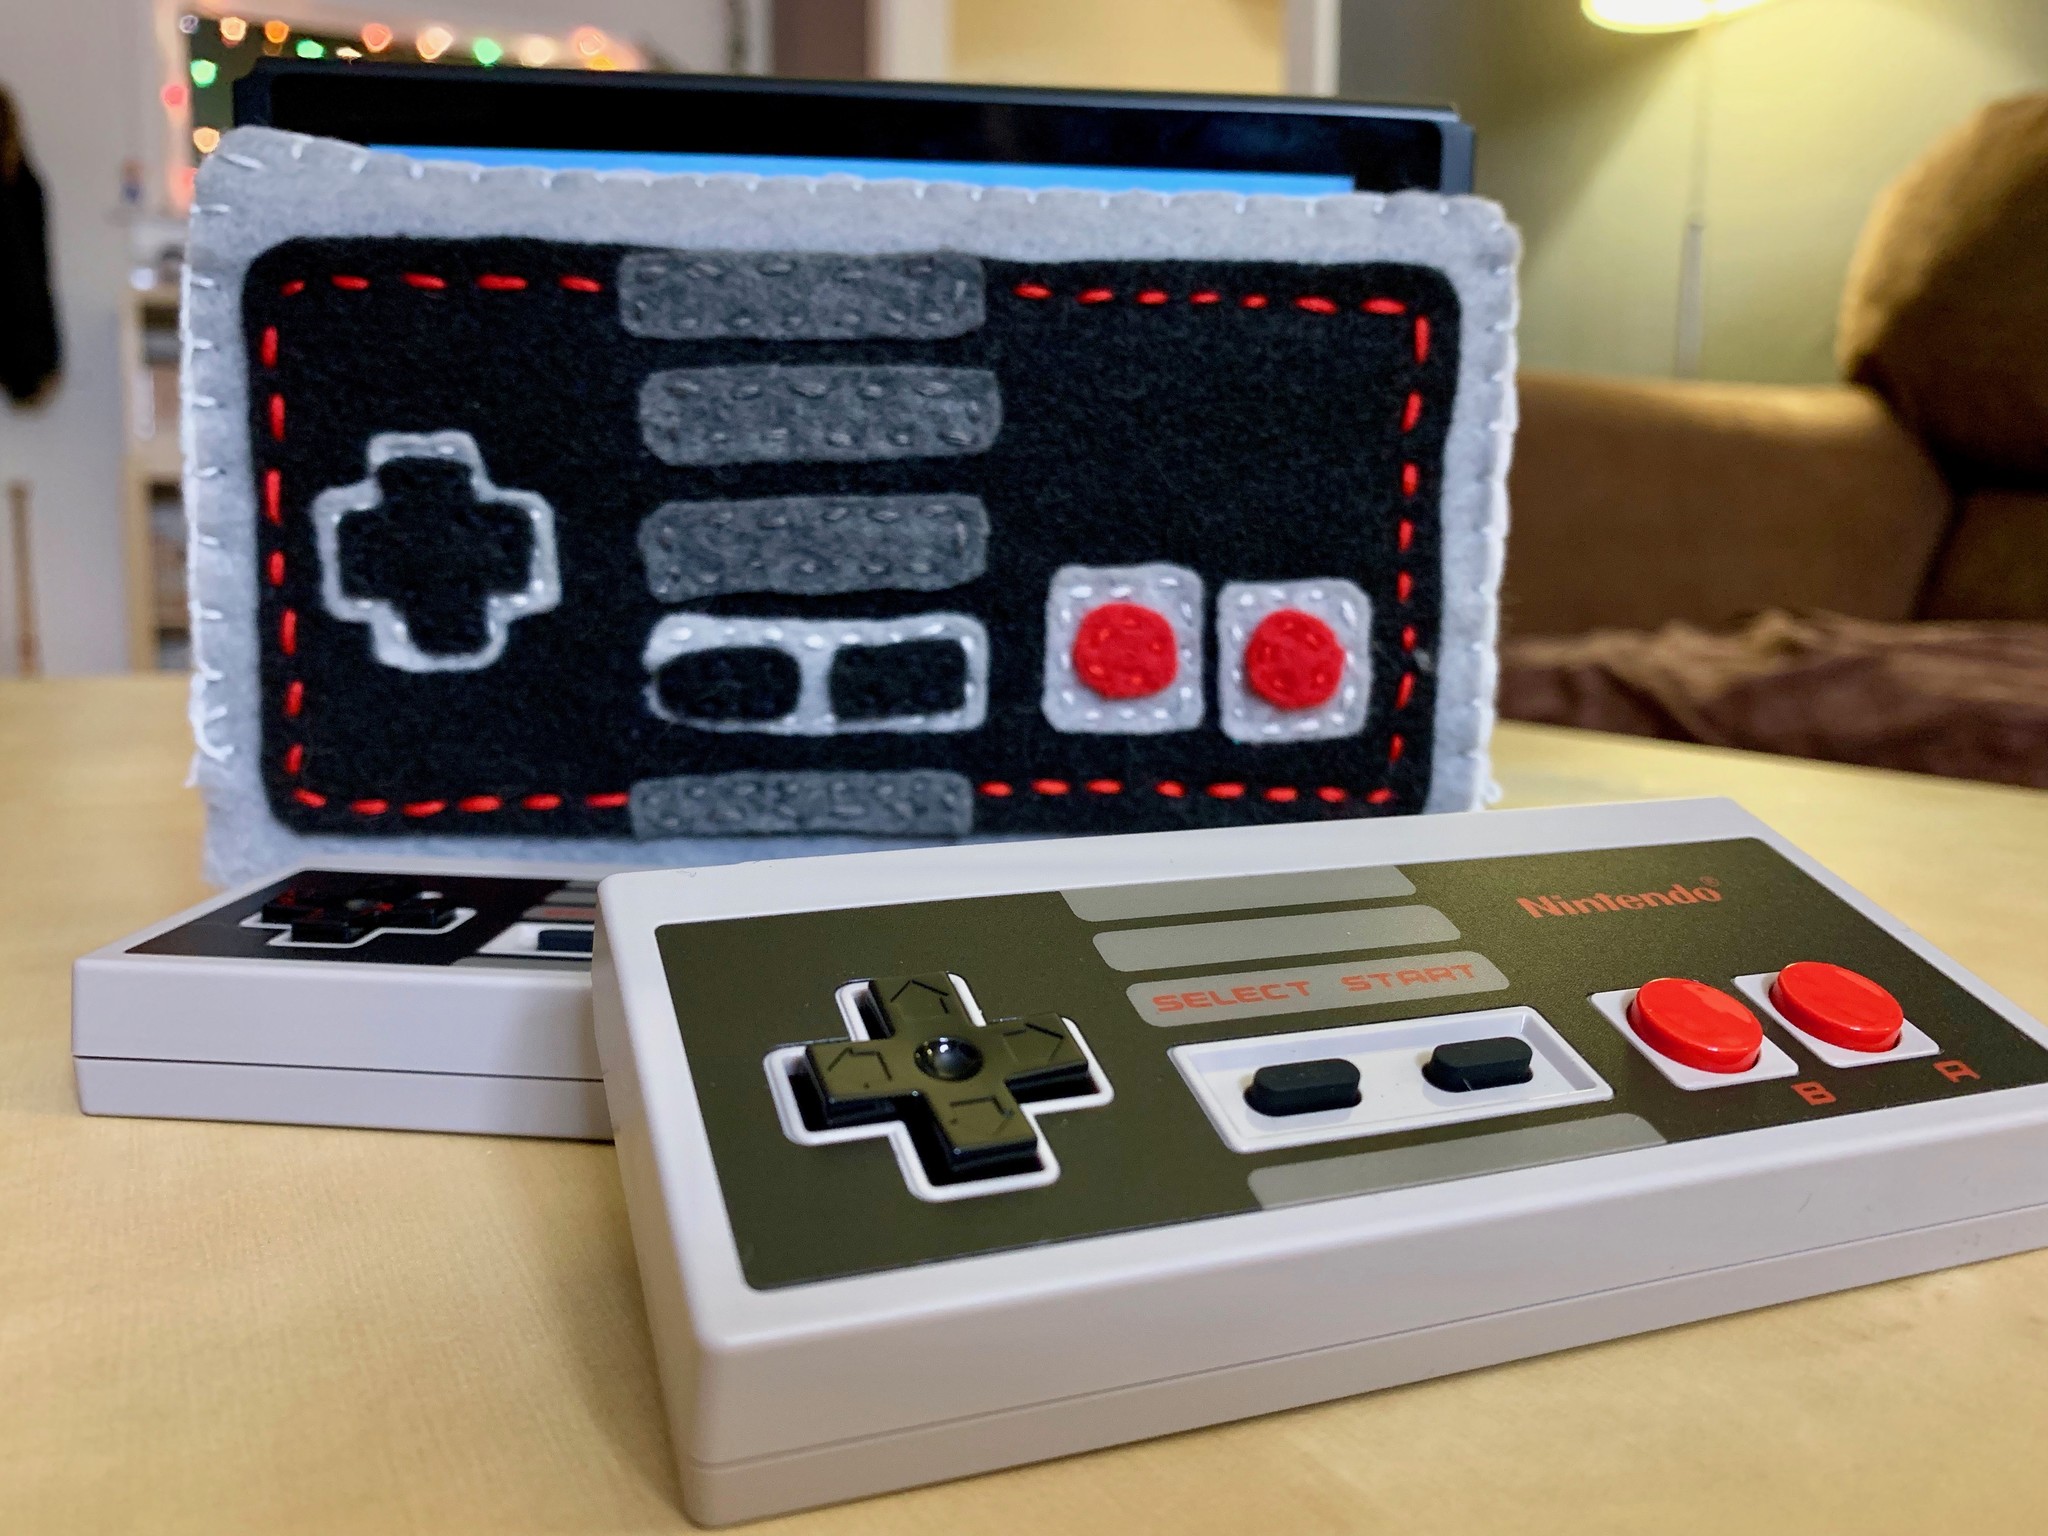 Контроллеры NES с Nintendo Switch